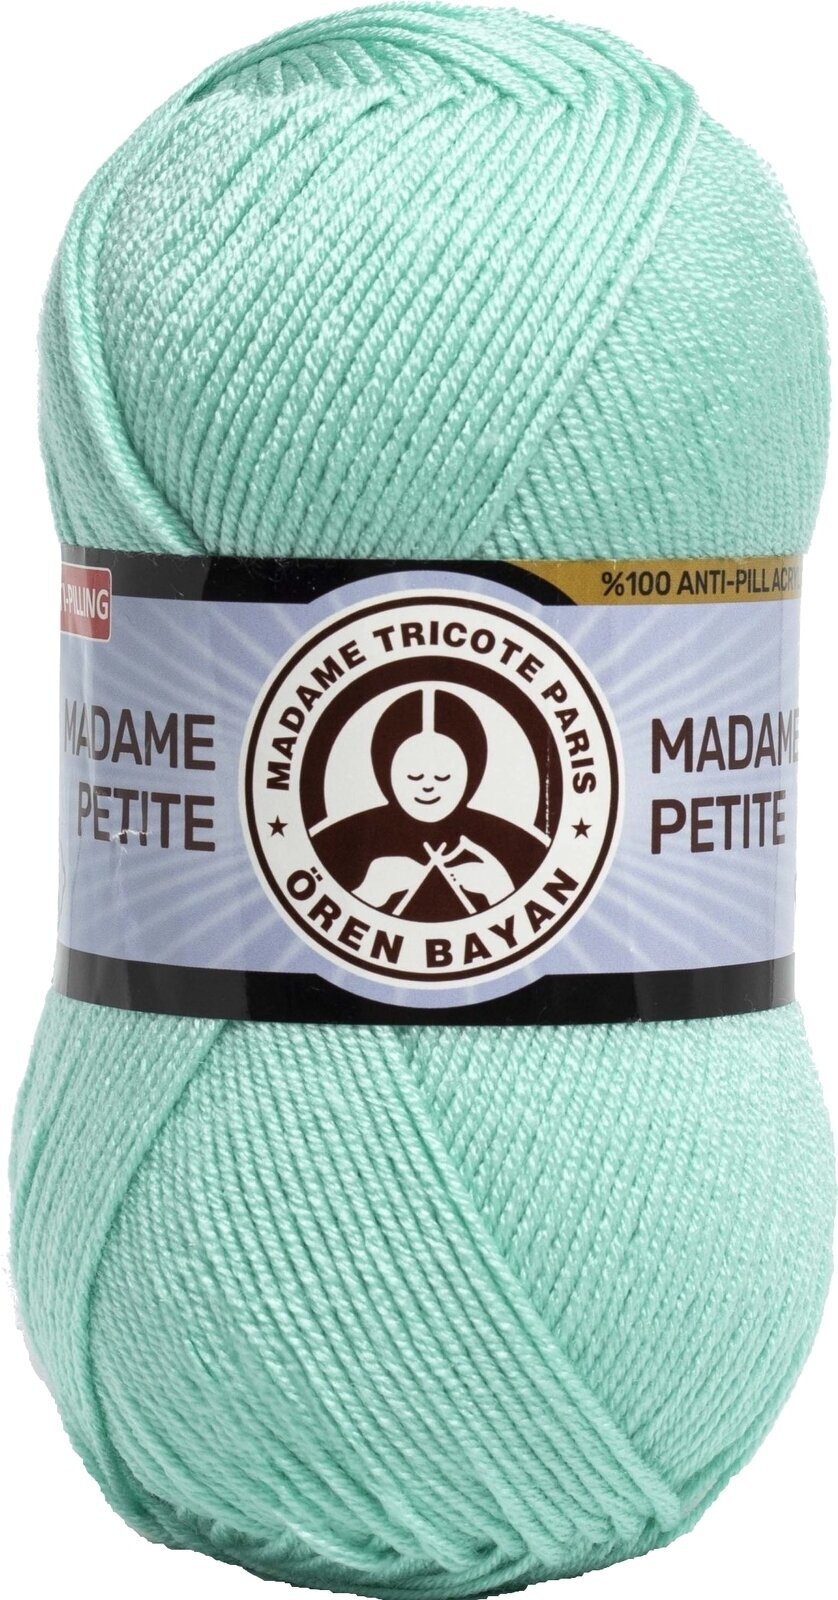 Knitting Yarn Madame Tricote Paris Madame Petite 3848 140 Knitting Yarn